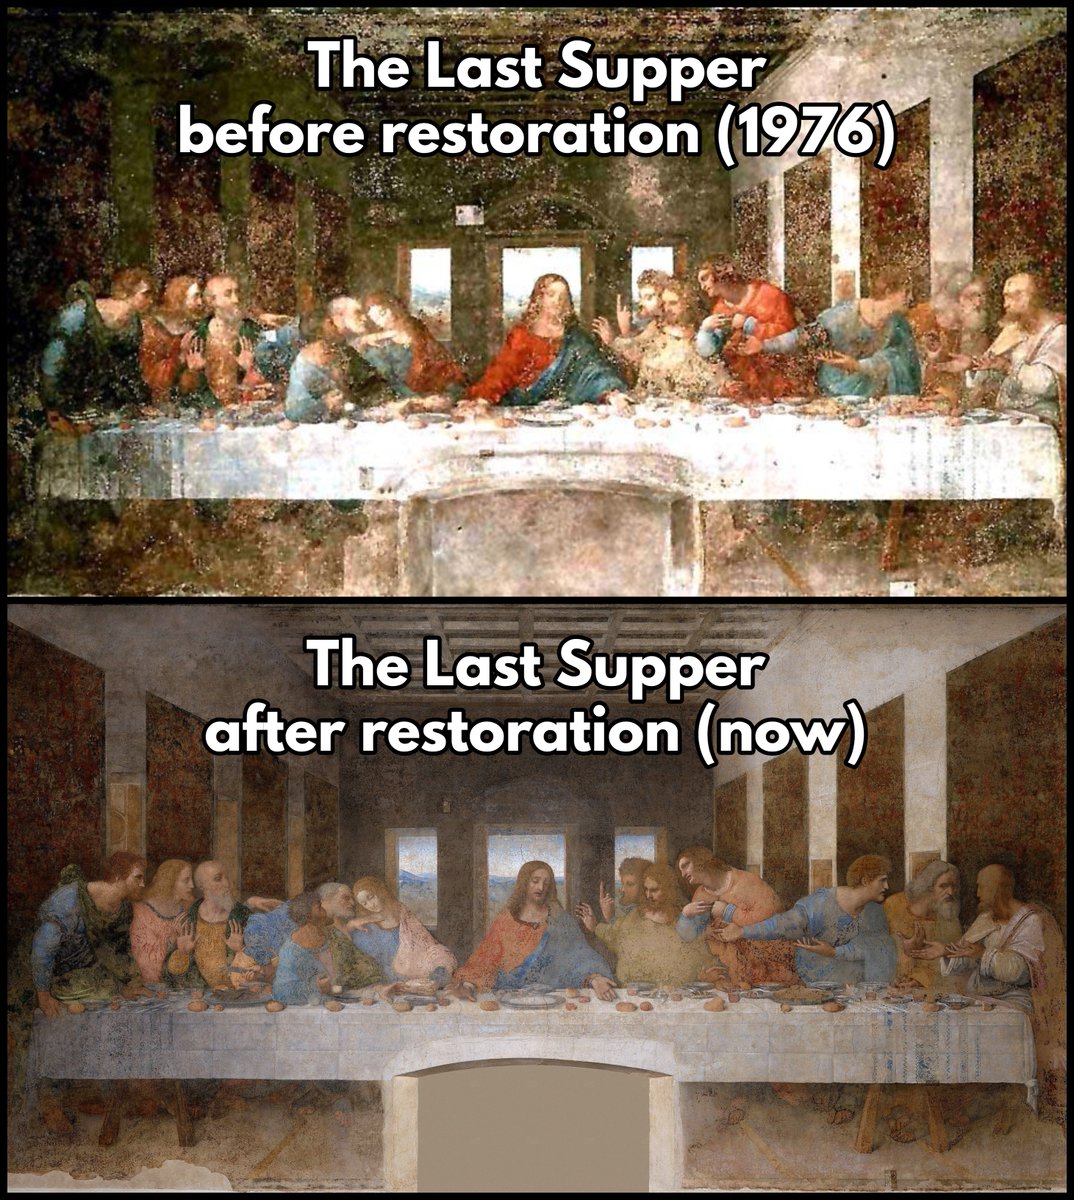 Do you approve of the recent restoration of Leonardo da Vinci's The Last Supper?